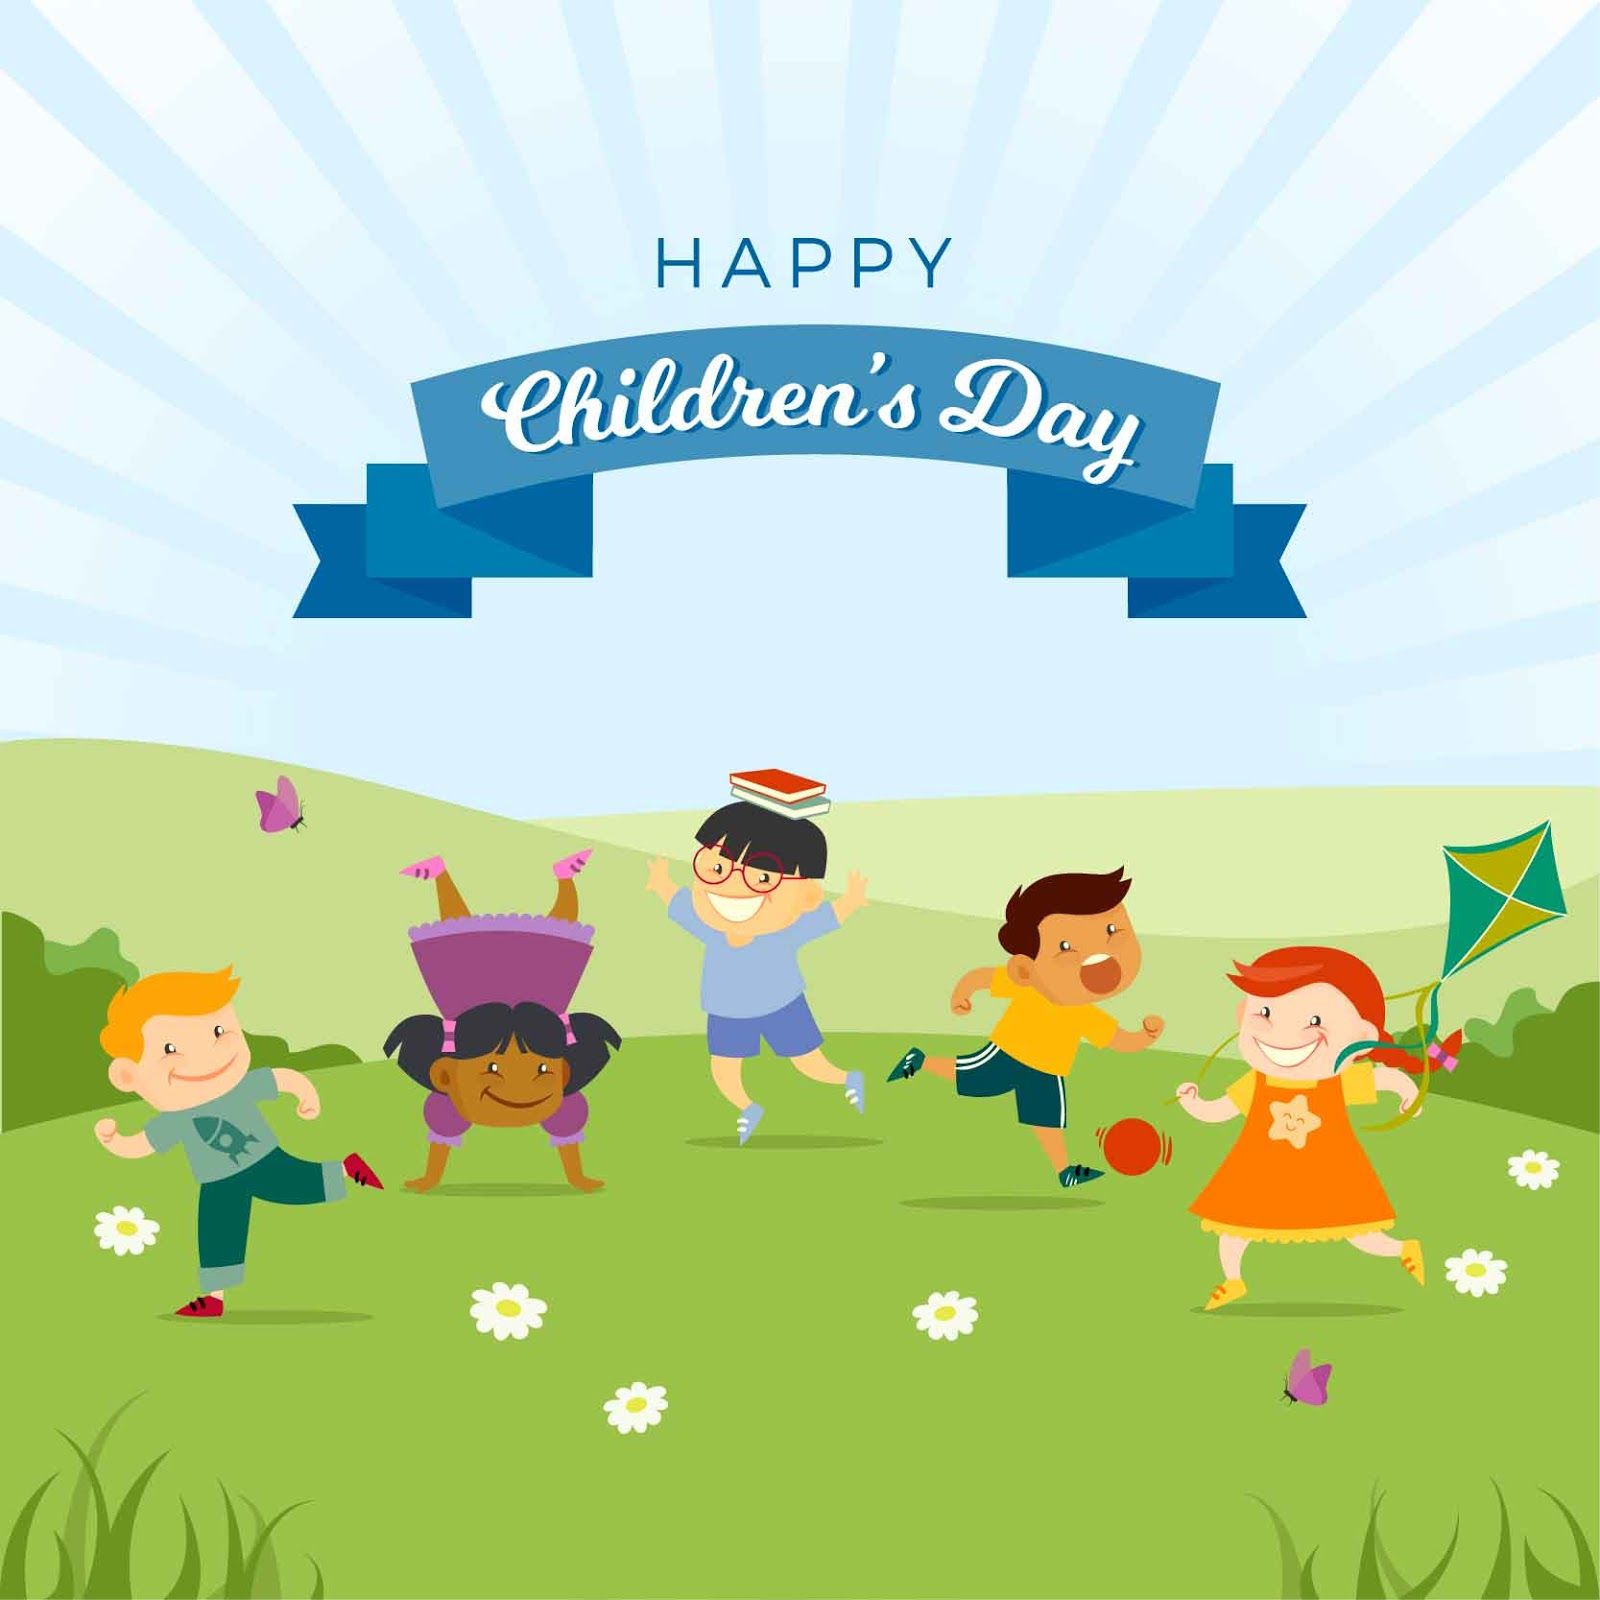 Happy Children's Day images